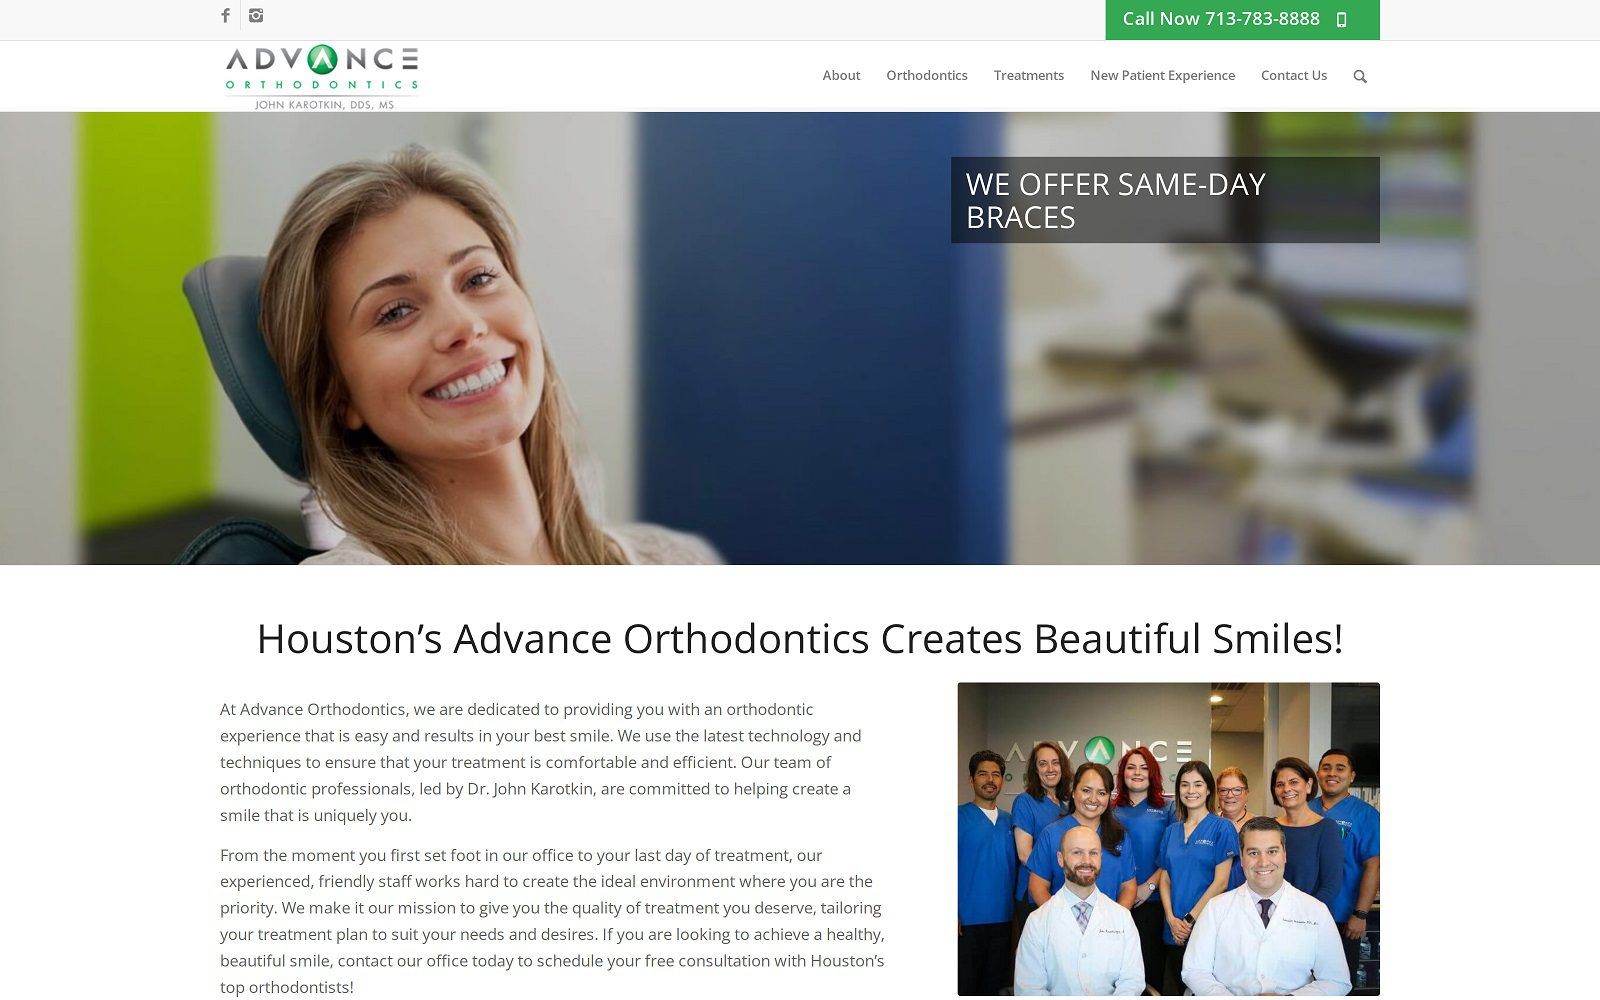 The screenshot of advance orthodontics - dr. John karotkin website